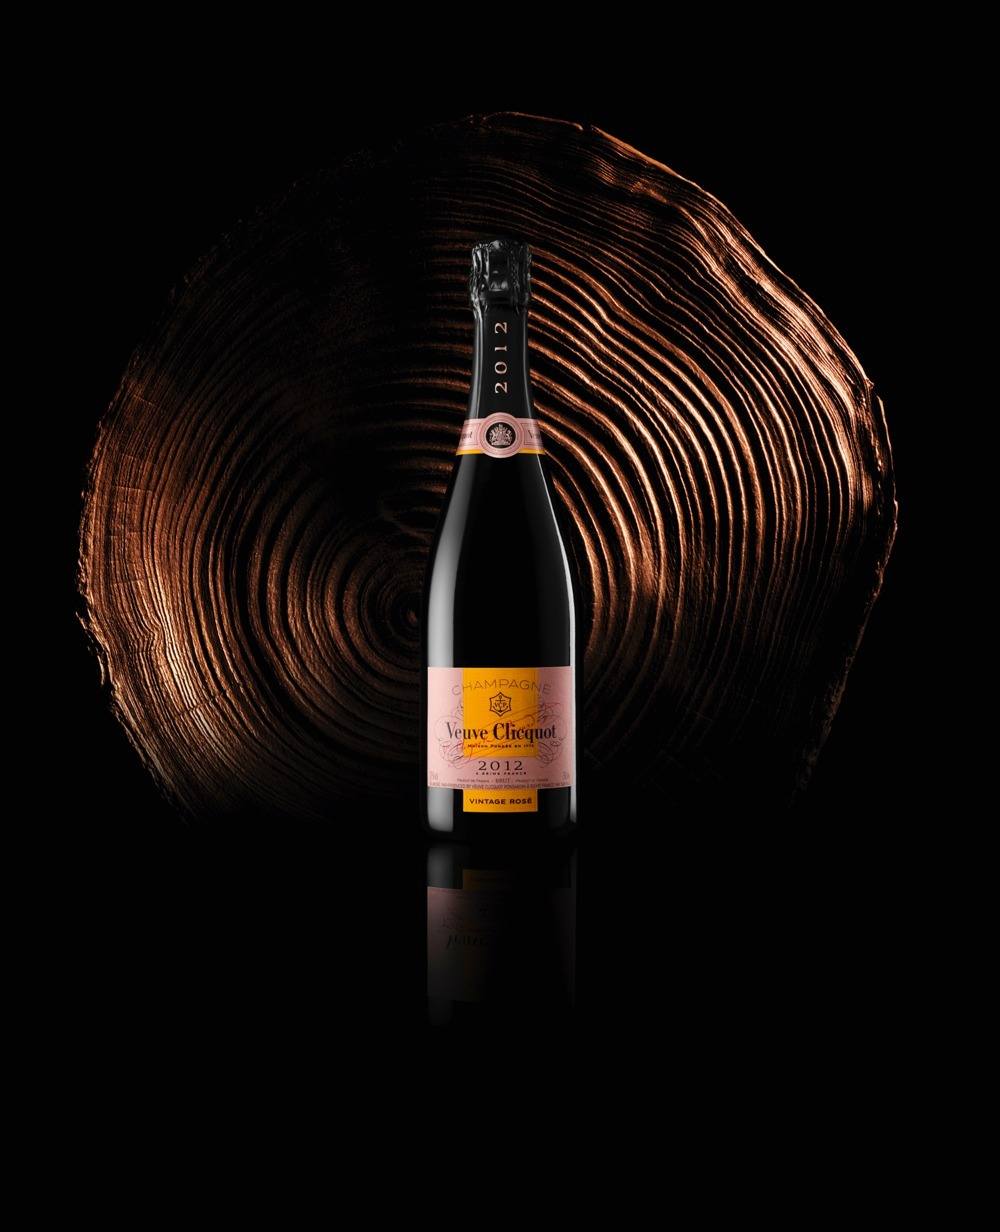 imagen 5 de Vintage Brut y Vintage Rosé 2012, nuevos champagne de Veuve Clicquot.